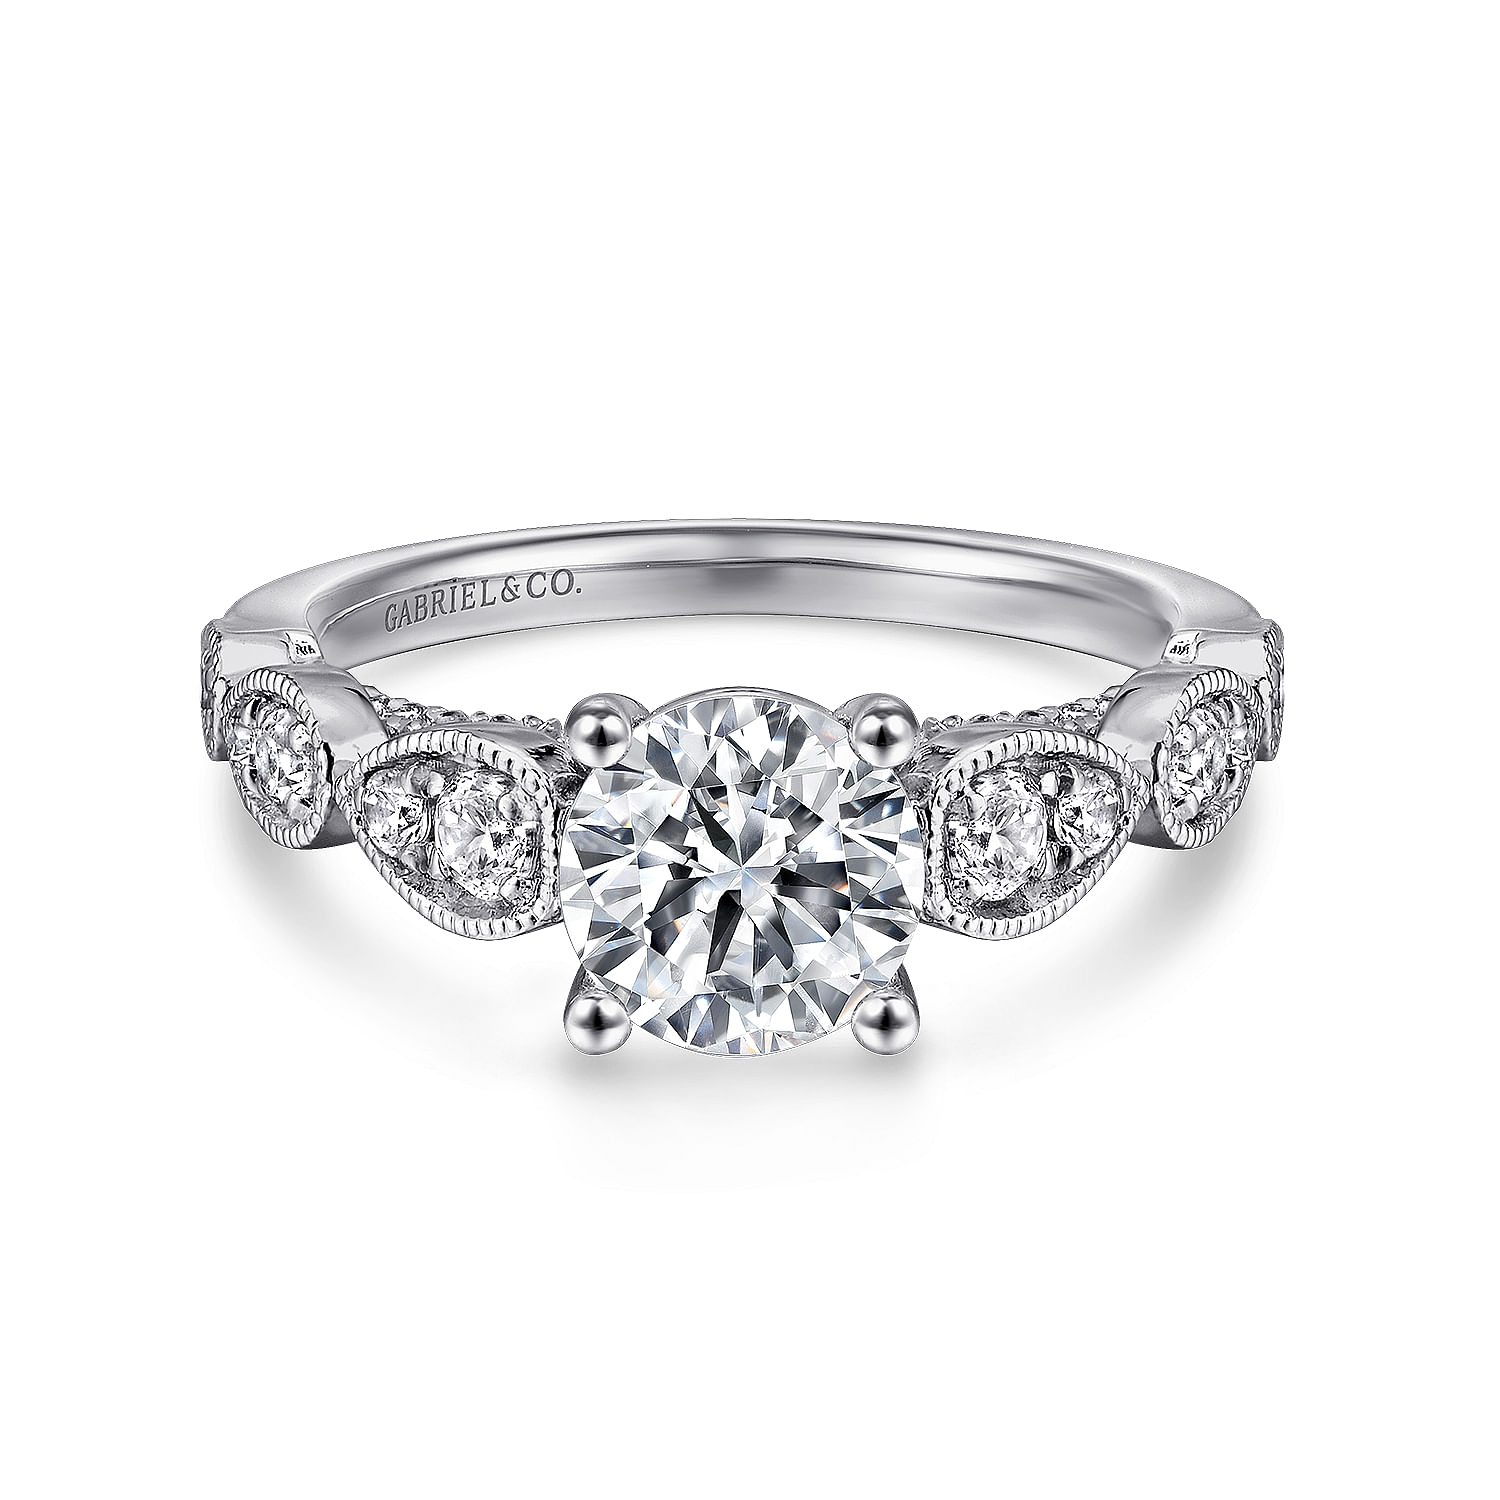 Garland - 14K White Gold Round Diamond Engagement Ring